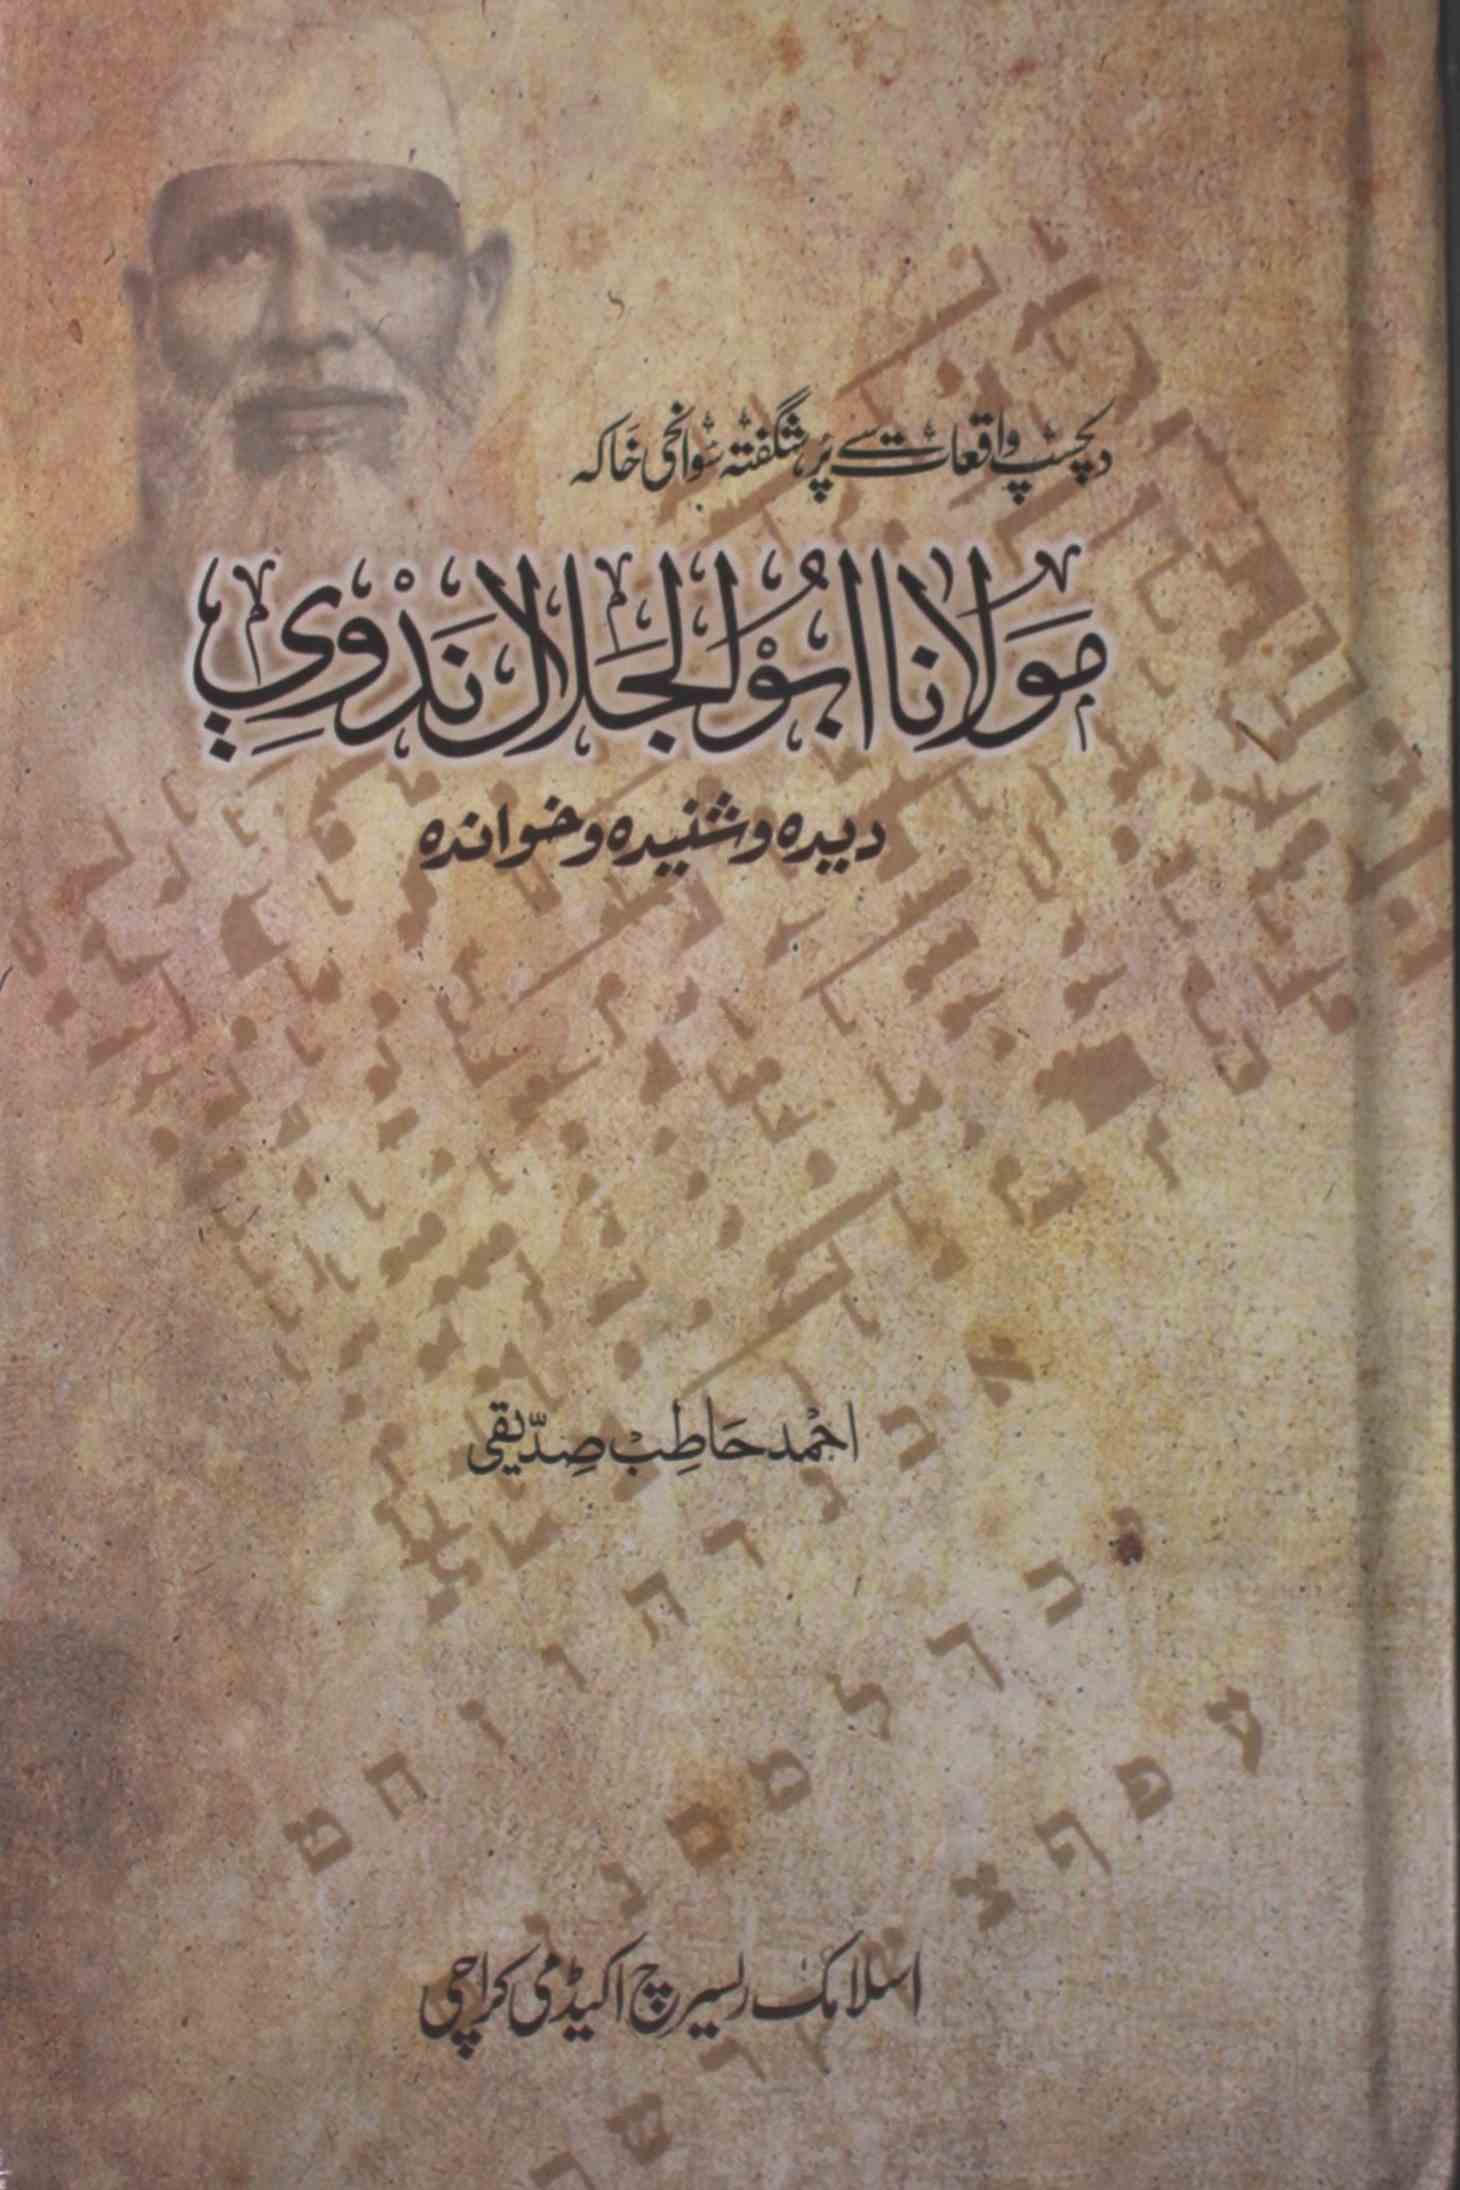 مولانا ابو الجلال ندوی